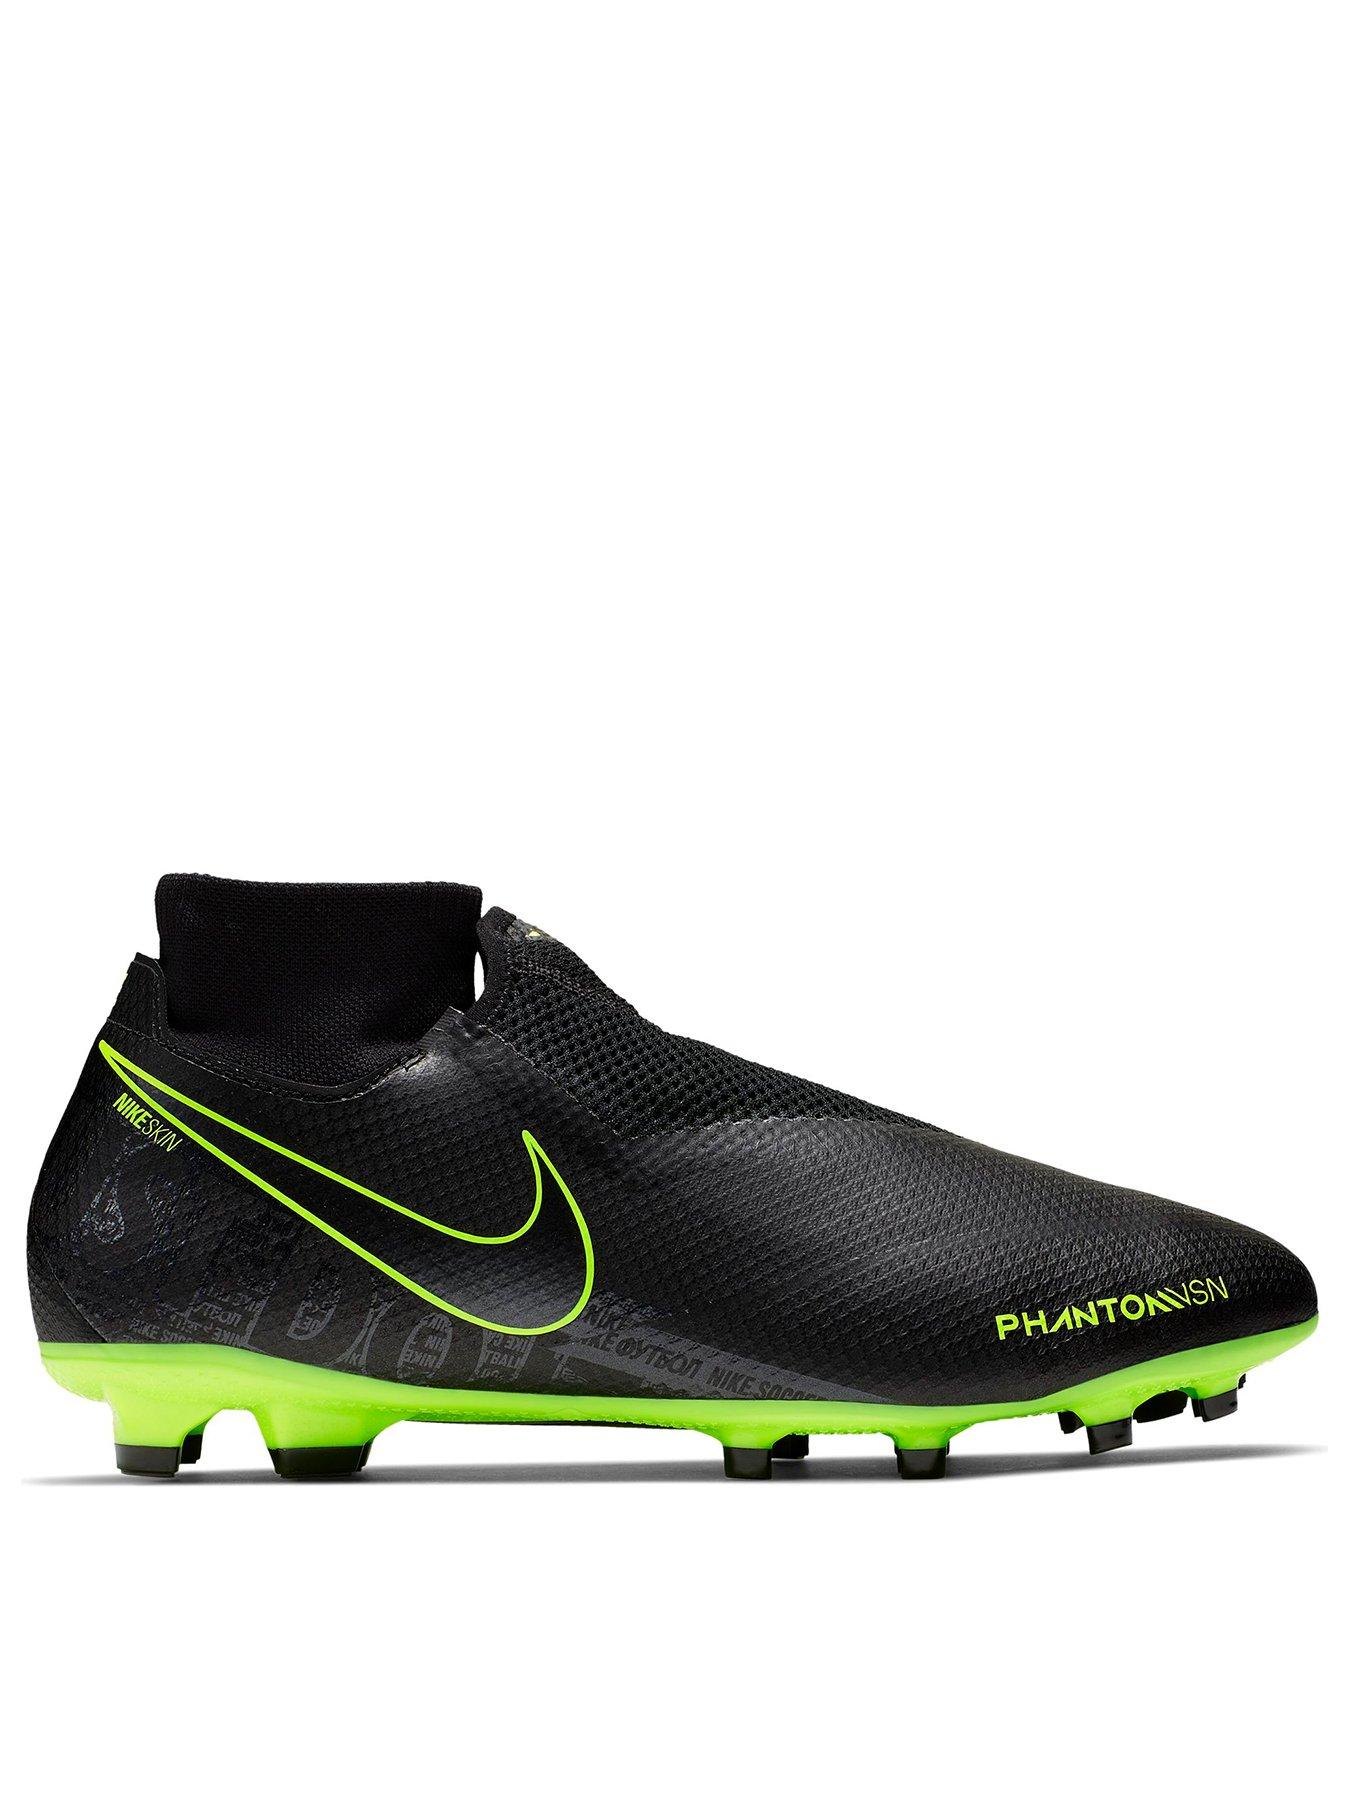 Soccer cleats, Football boots, Phantom vision Pinterest